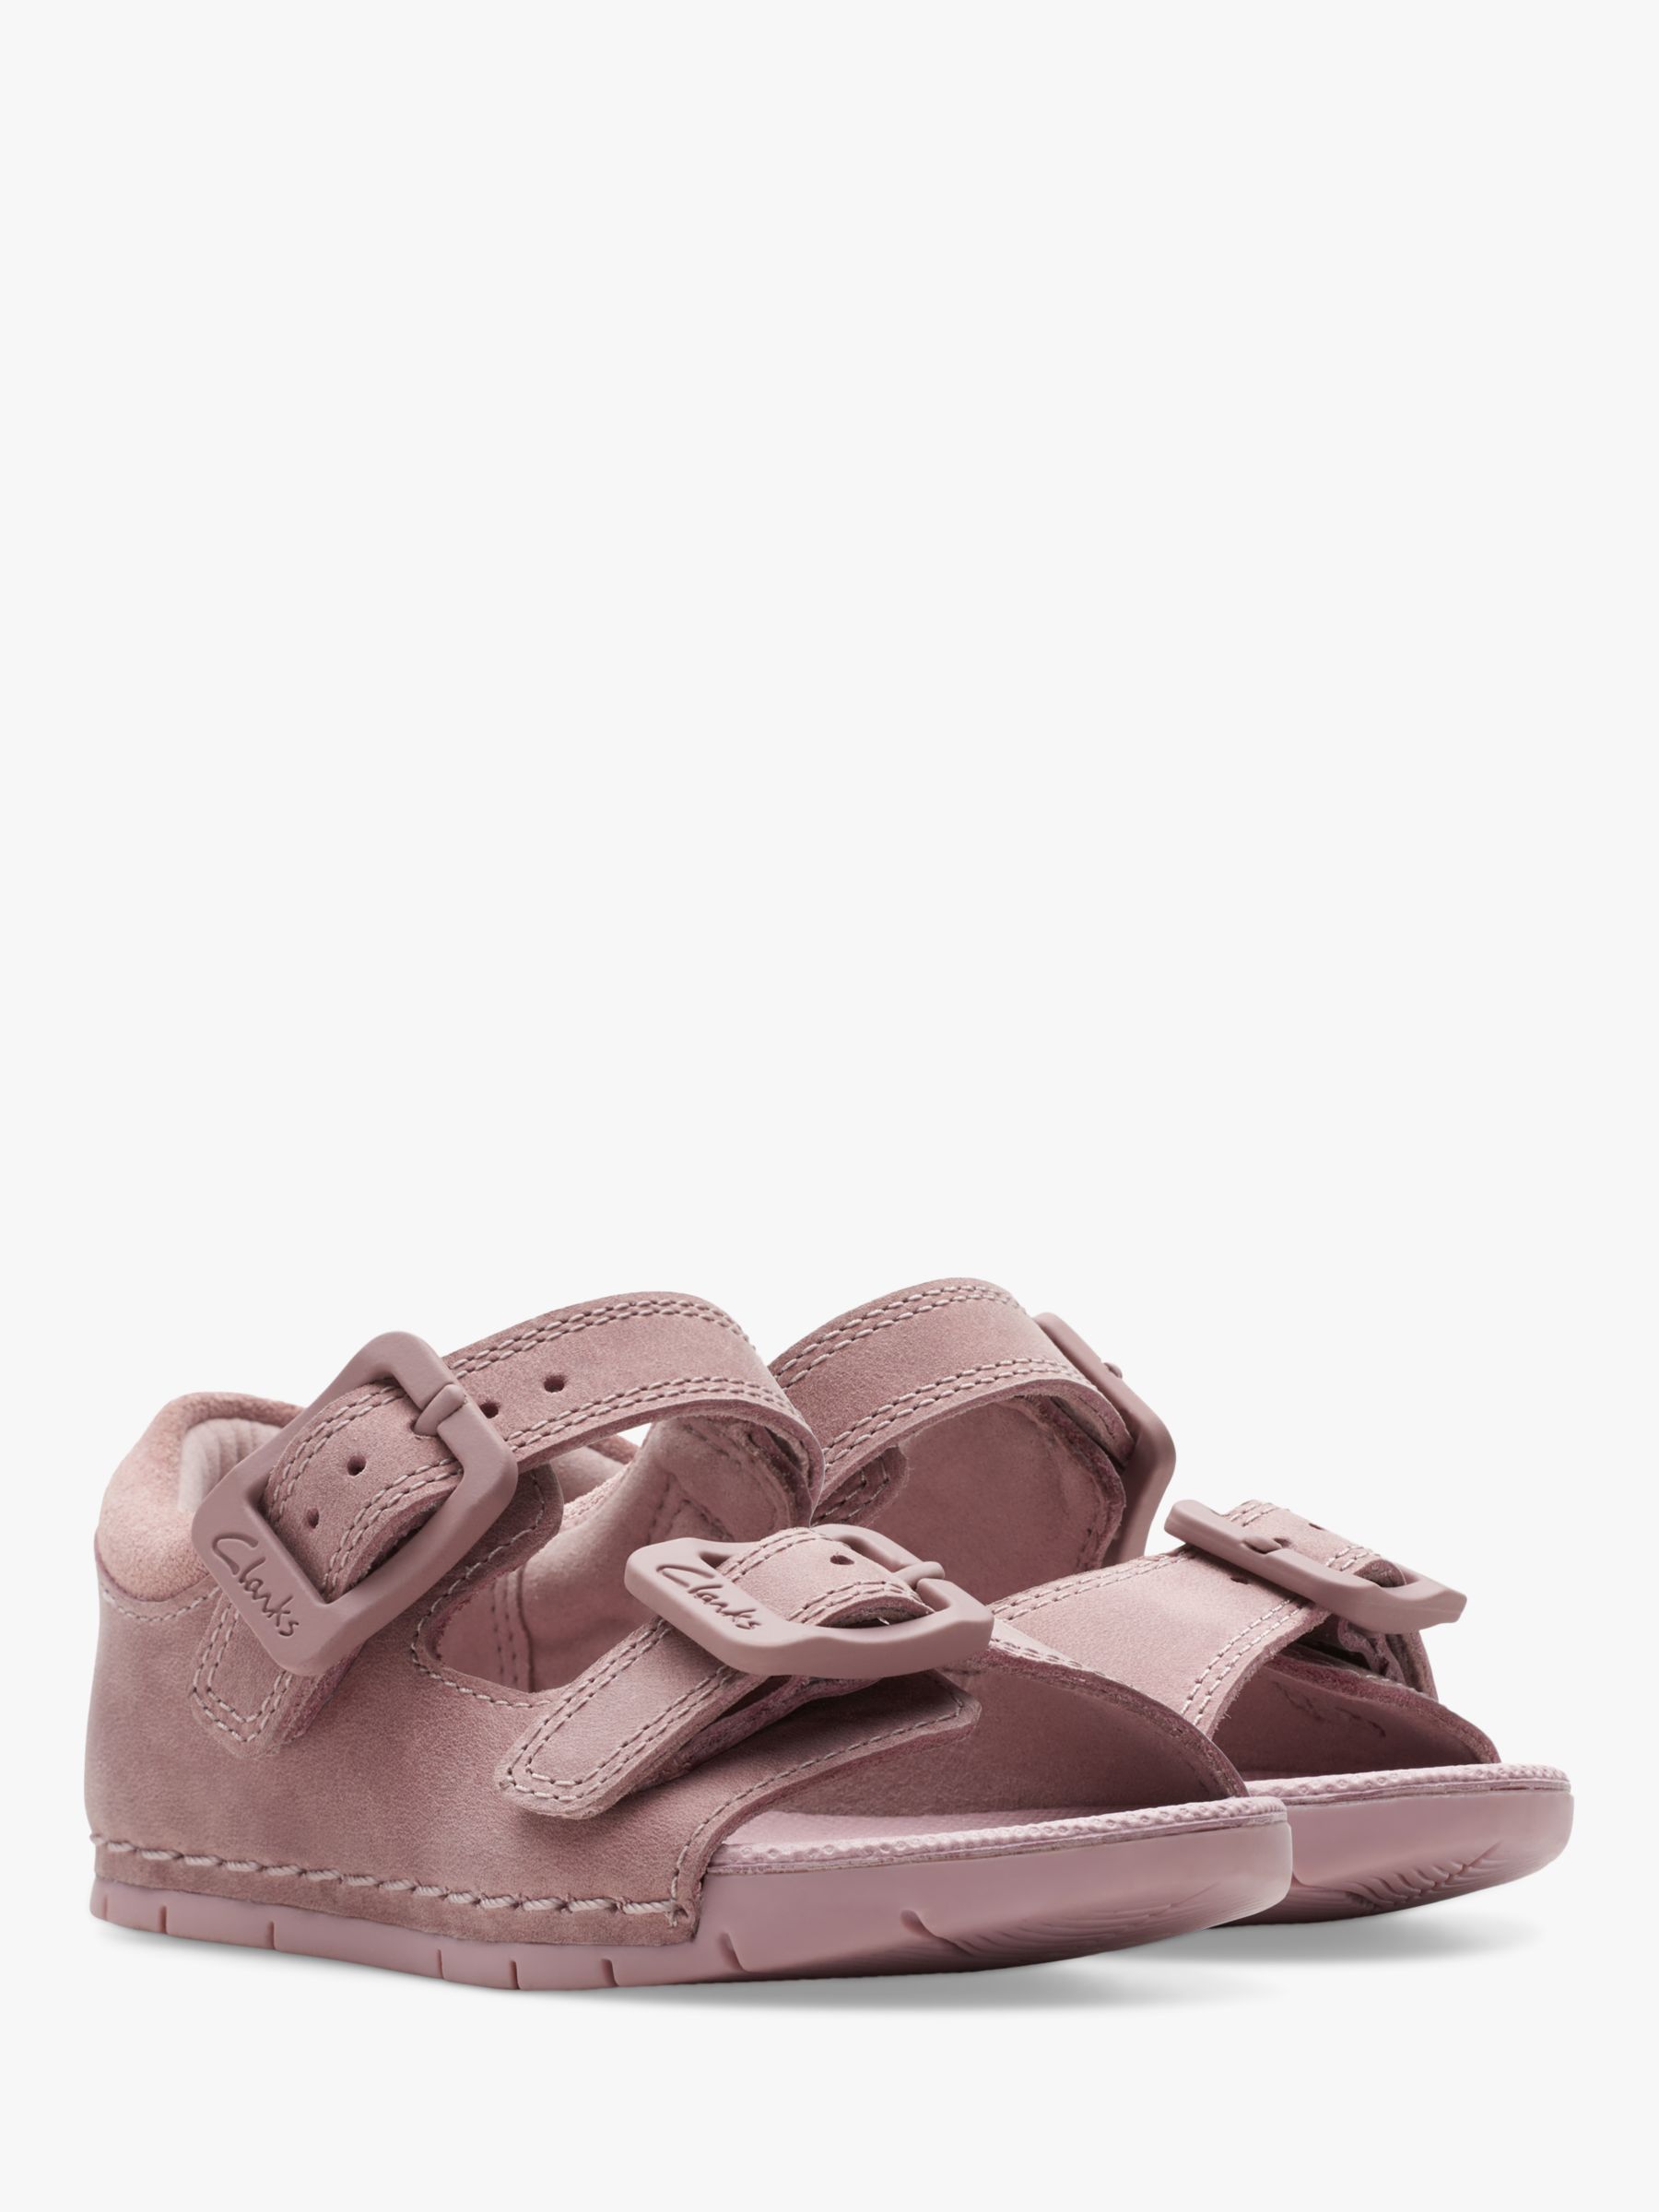 Clarks Kids' Baha Beach Leather Sandals, Dusty Pink, 5F Jnr